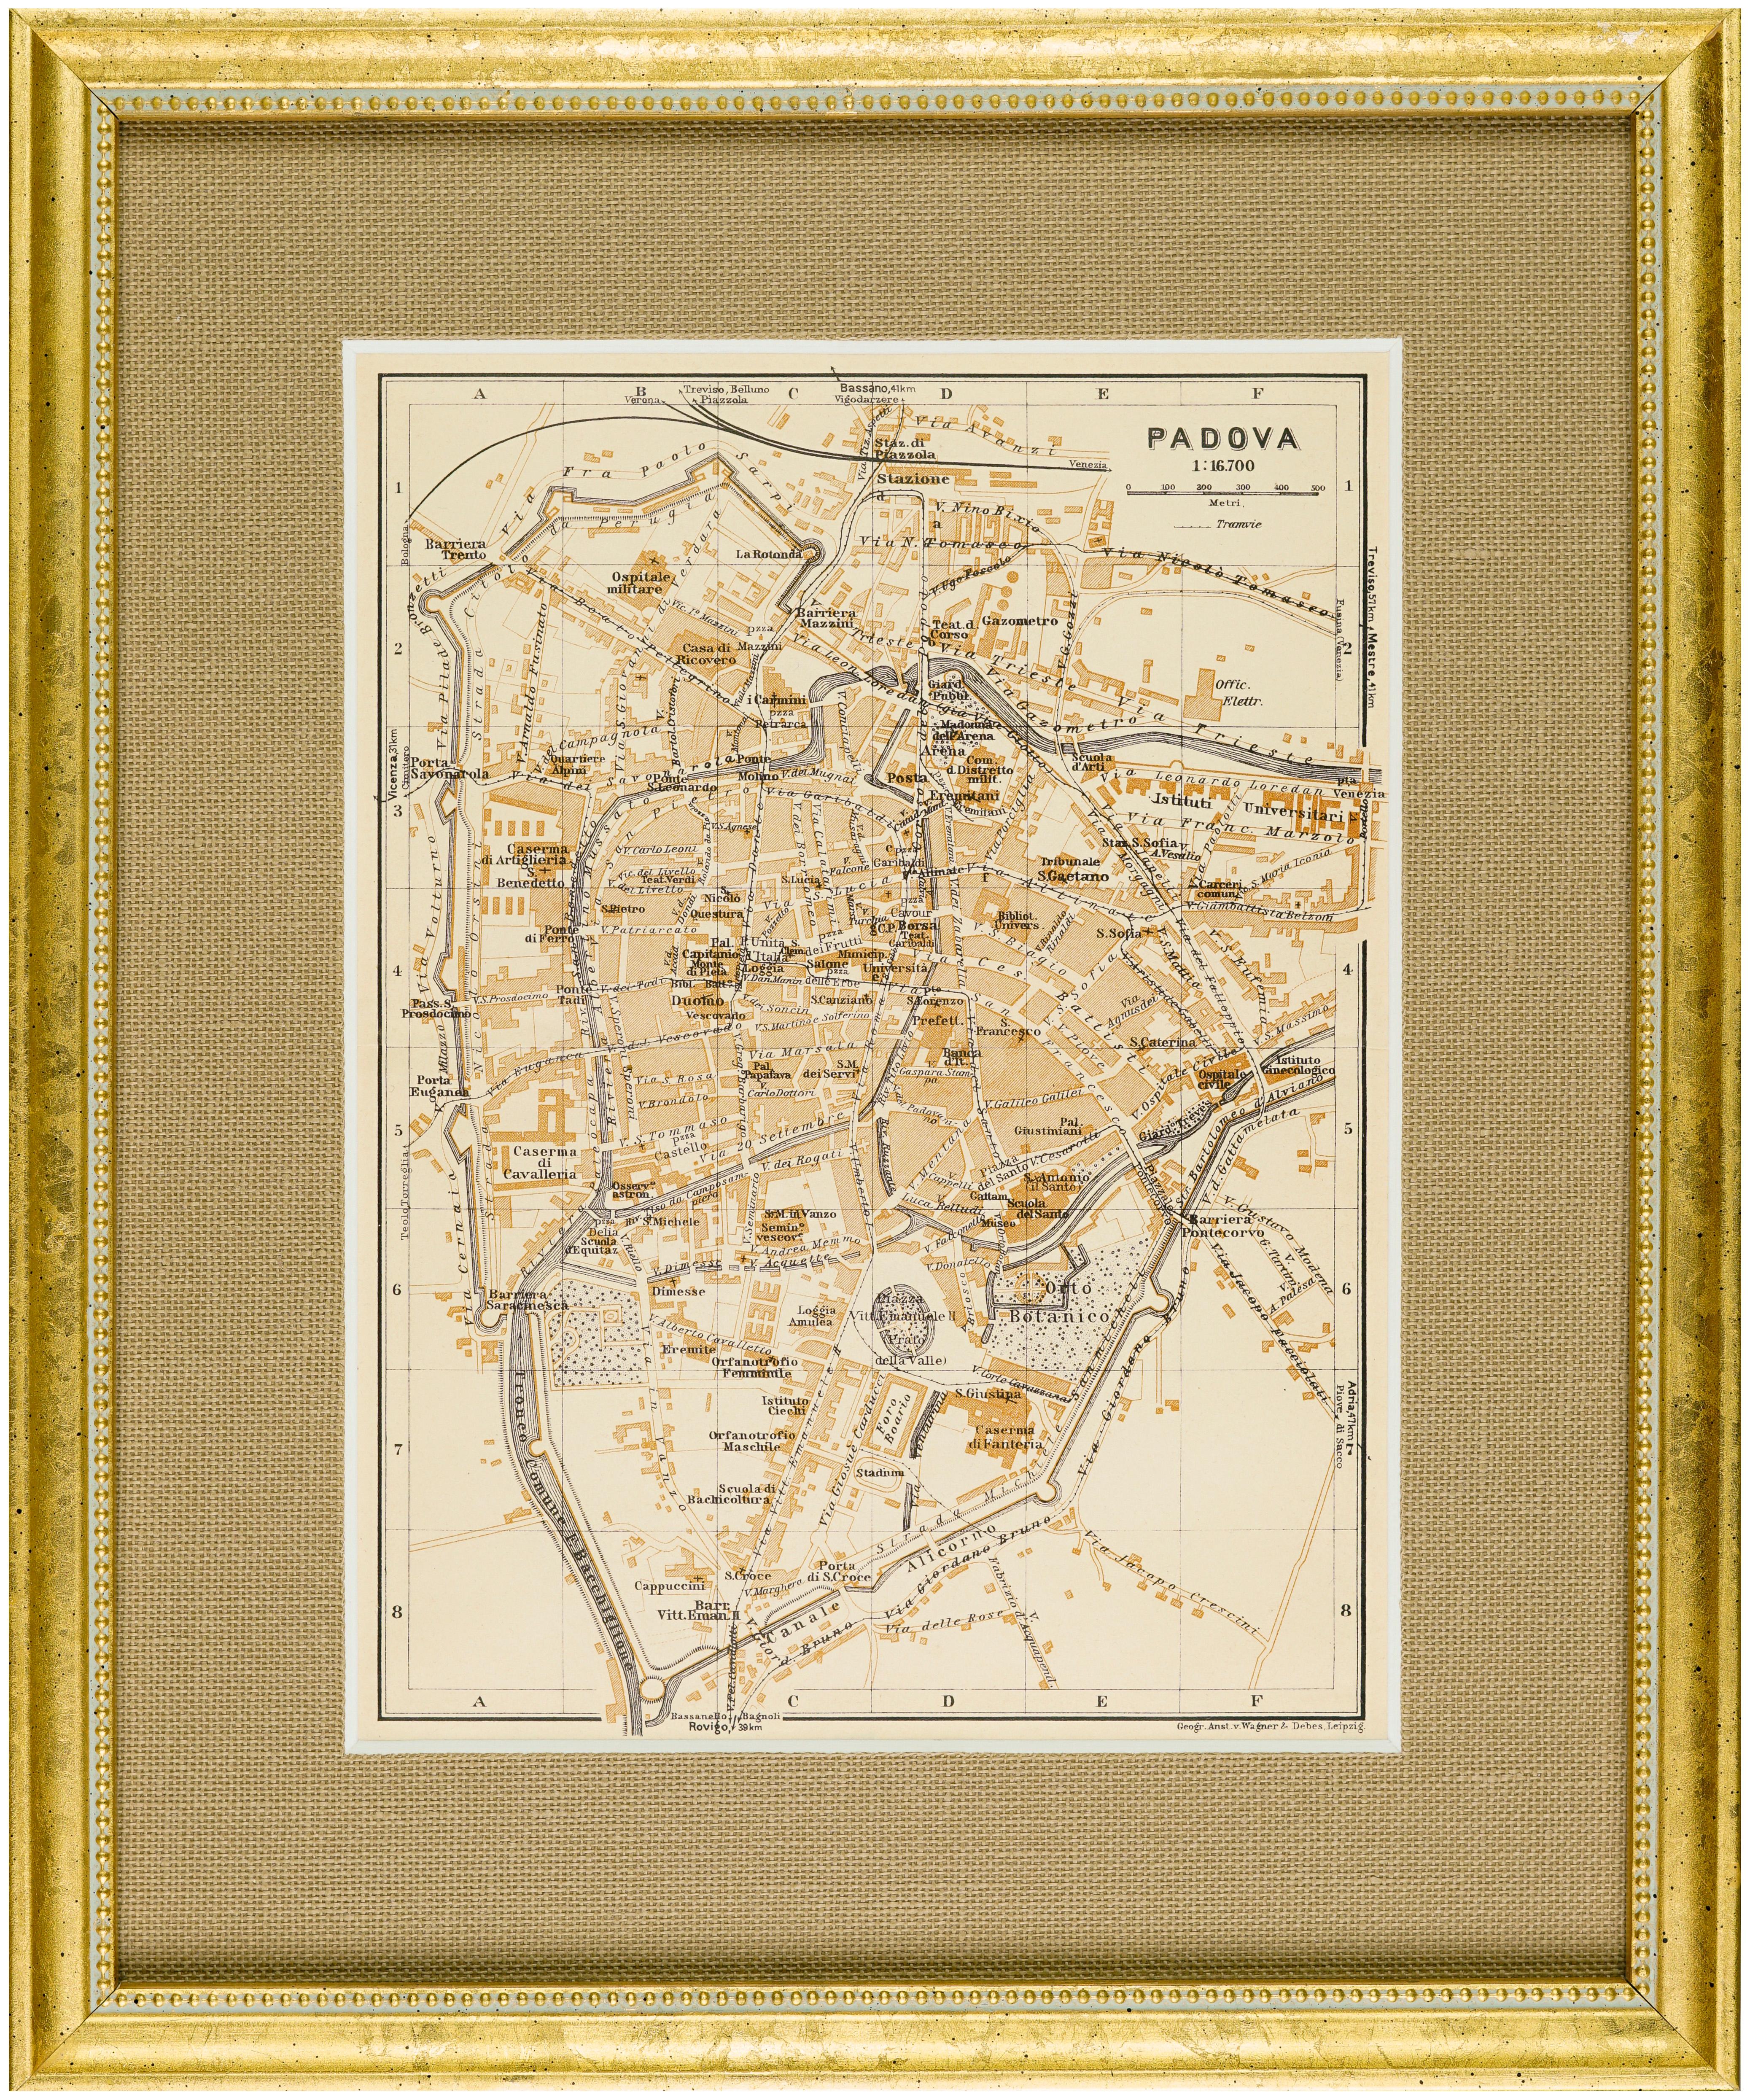 Unknown Print - 1928 Map of Padova (Padua), Italy